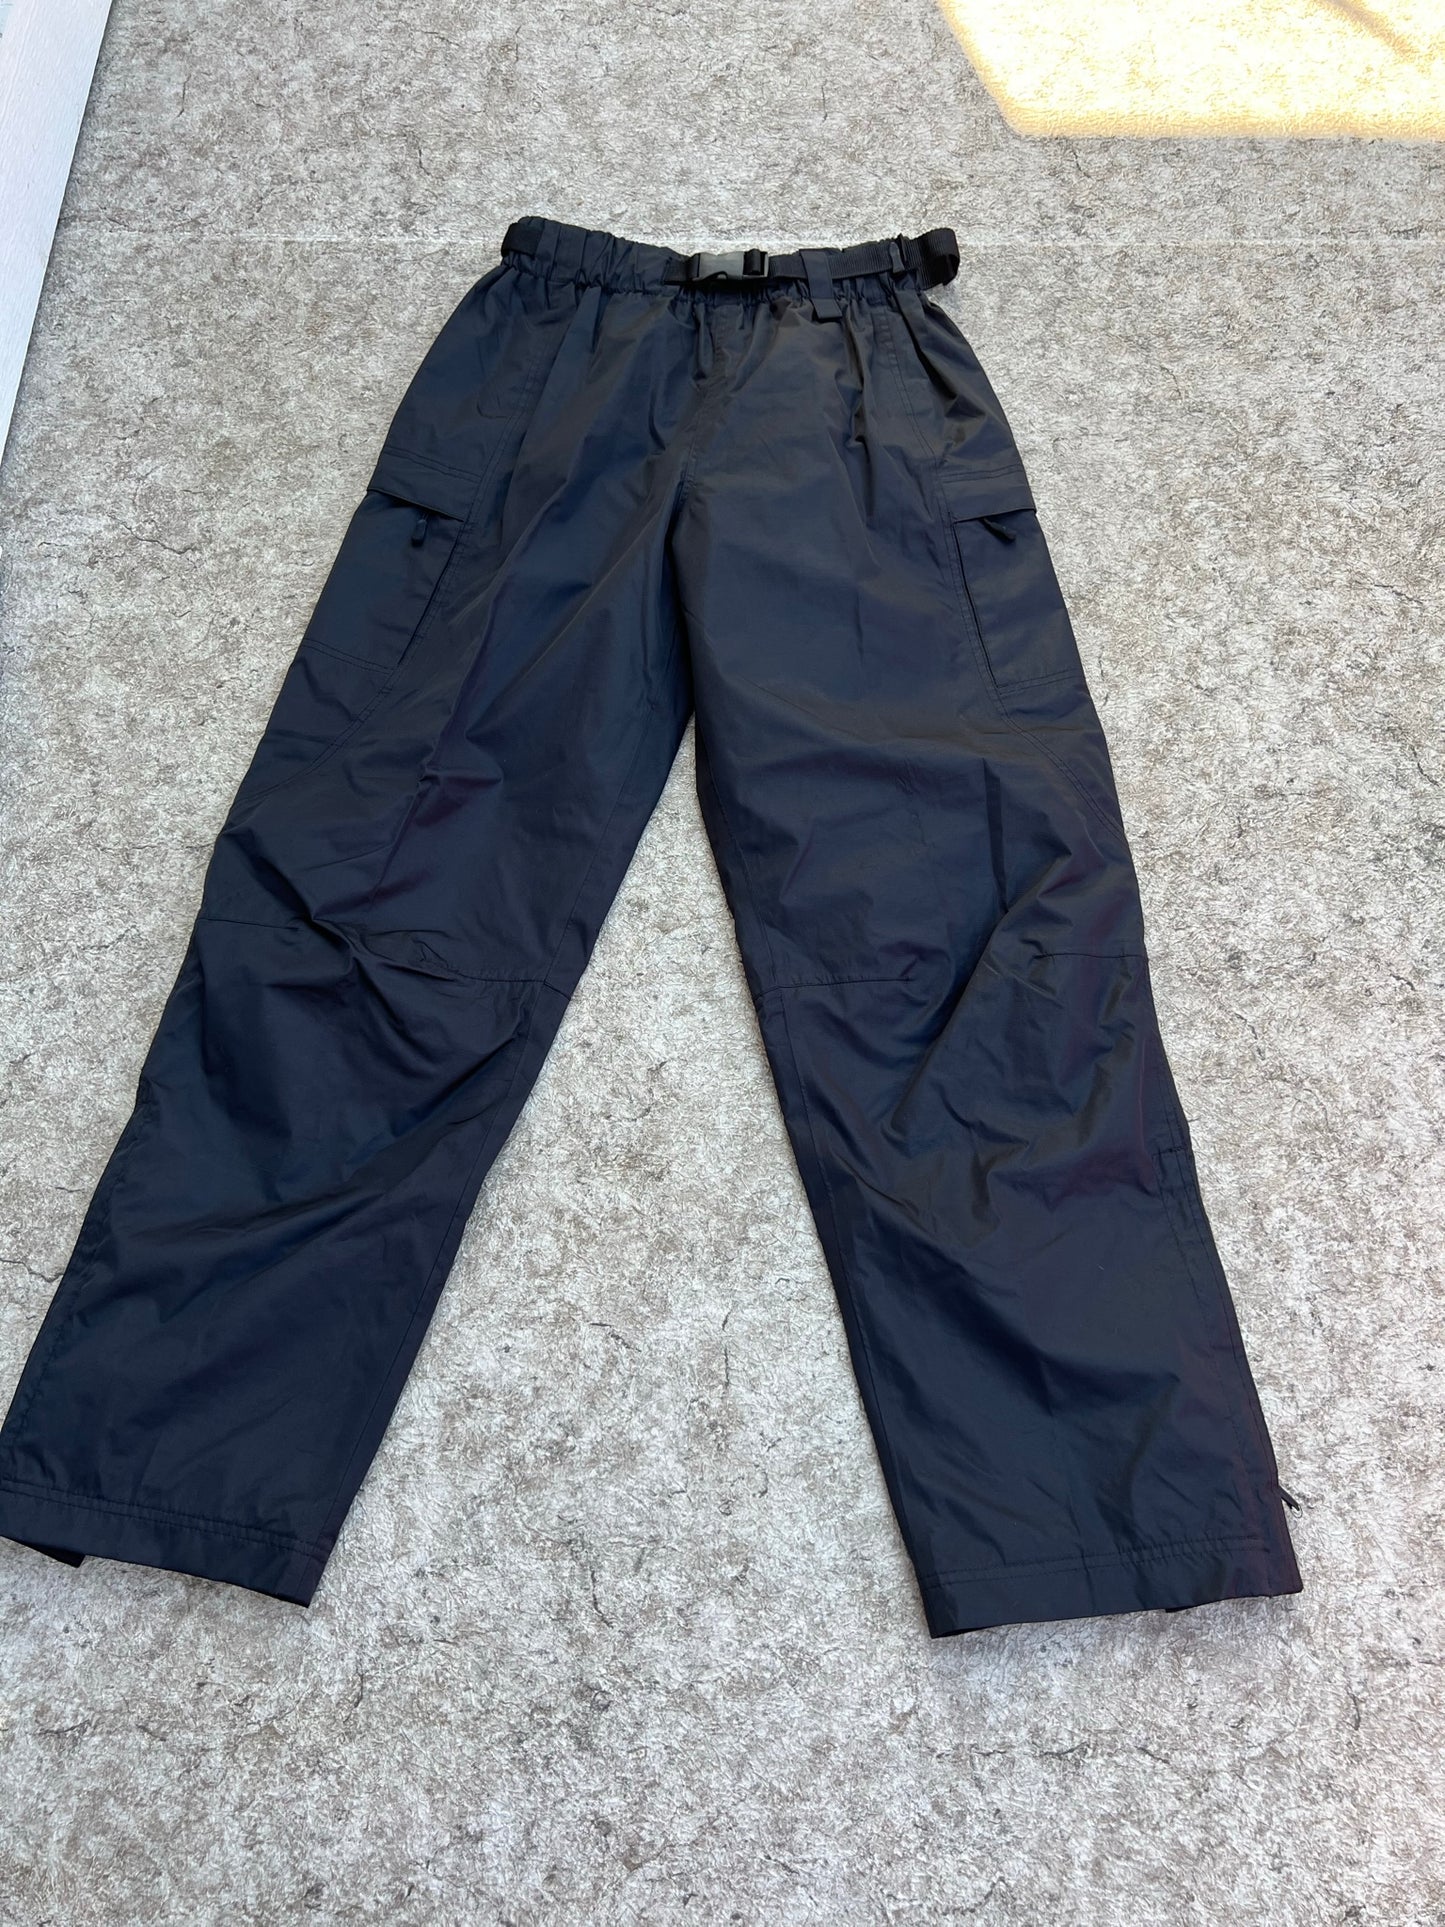 Rain Pants Men's Size Large Wetskins Black New Demo Model